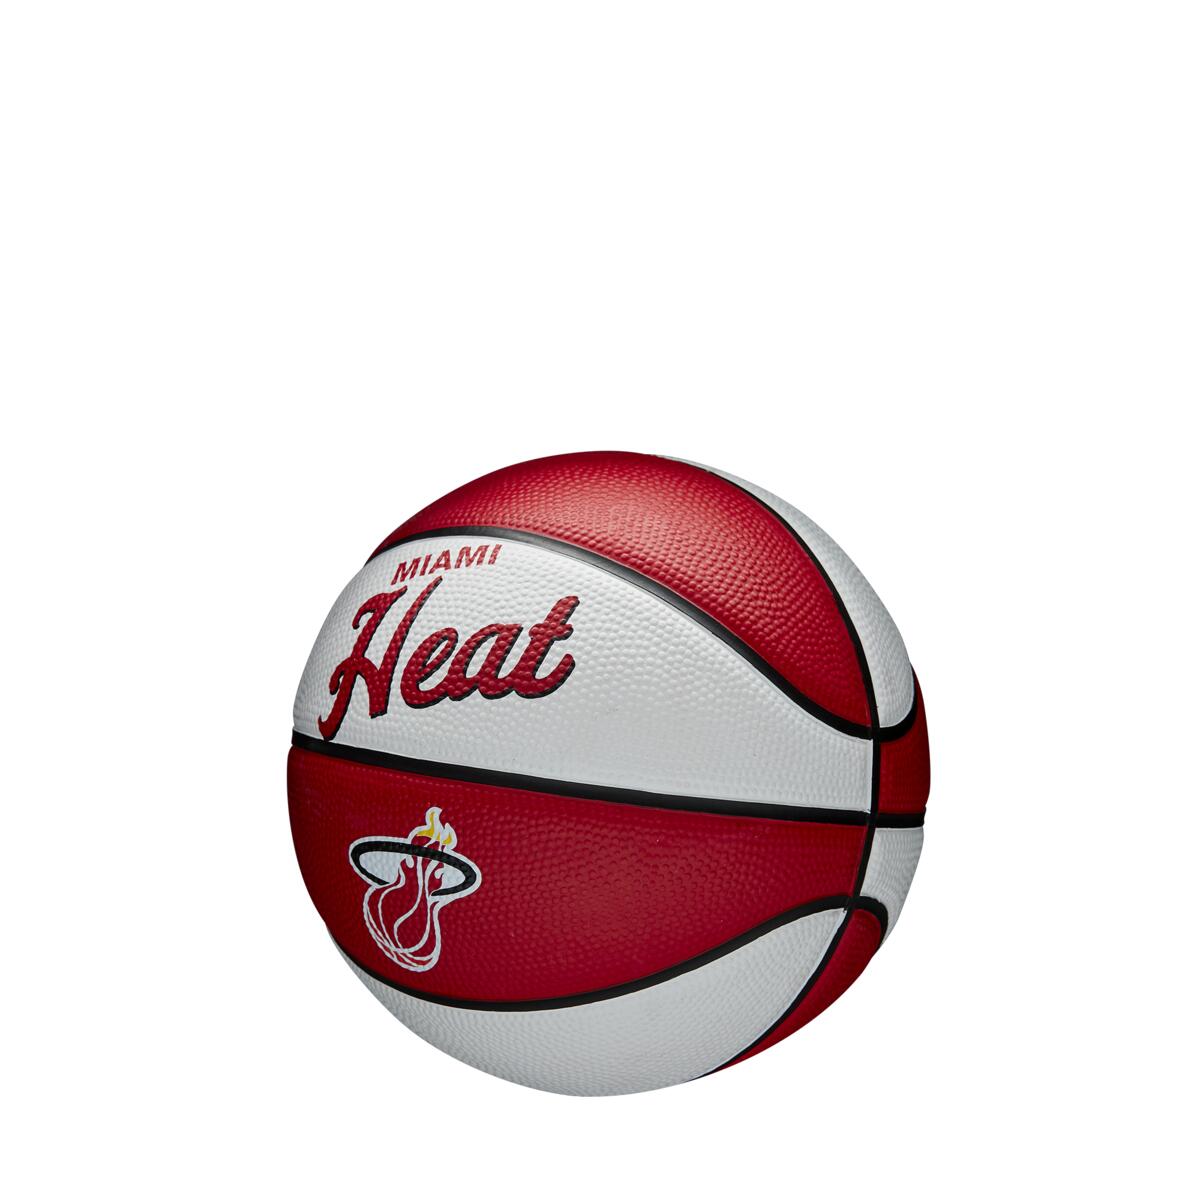 Ballons de basket NBA Retro Mini Miami Heat